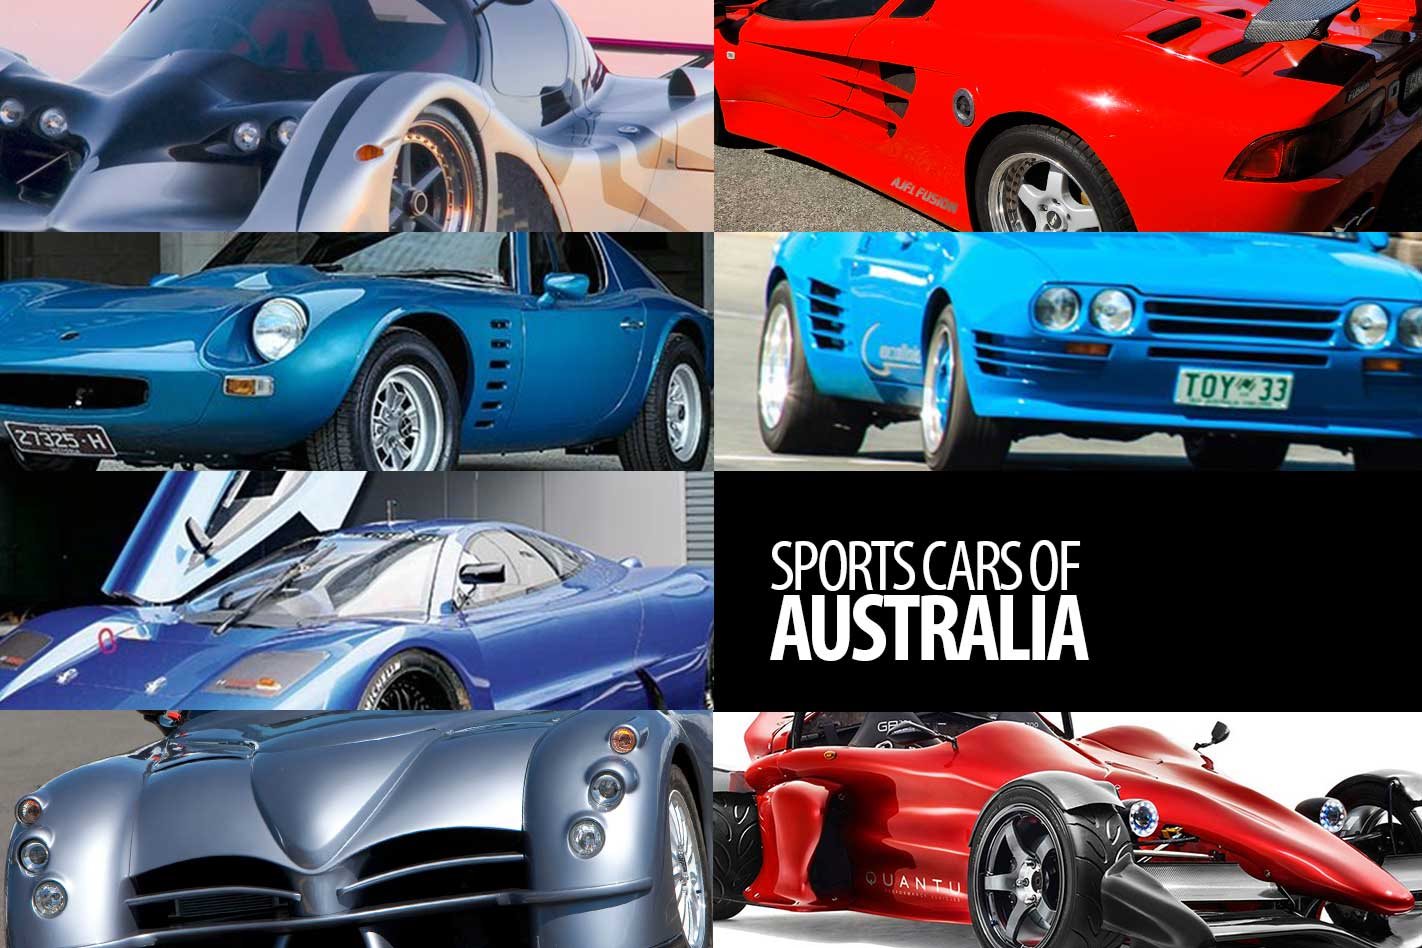 History of Australian sports cars